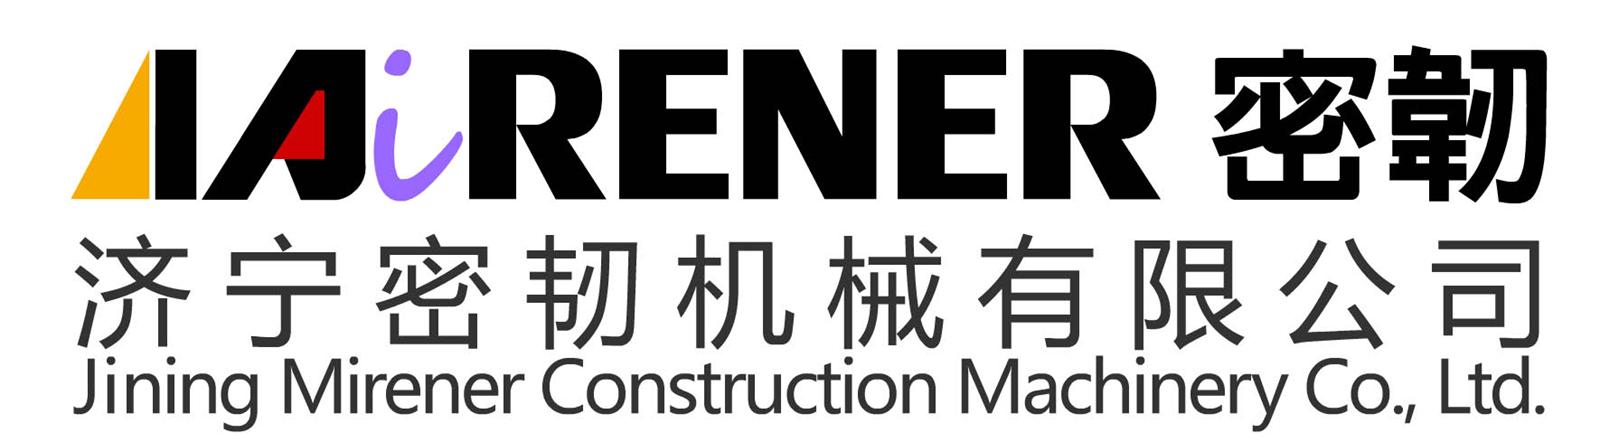 Jining Minerer Construction machinery co., LTD logo